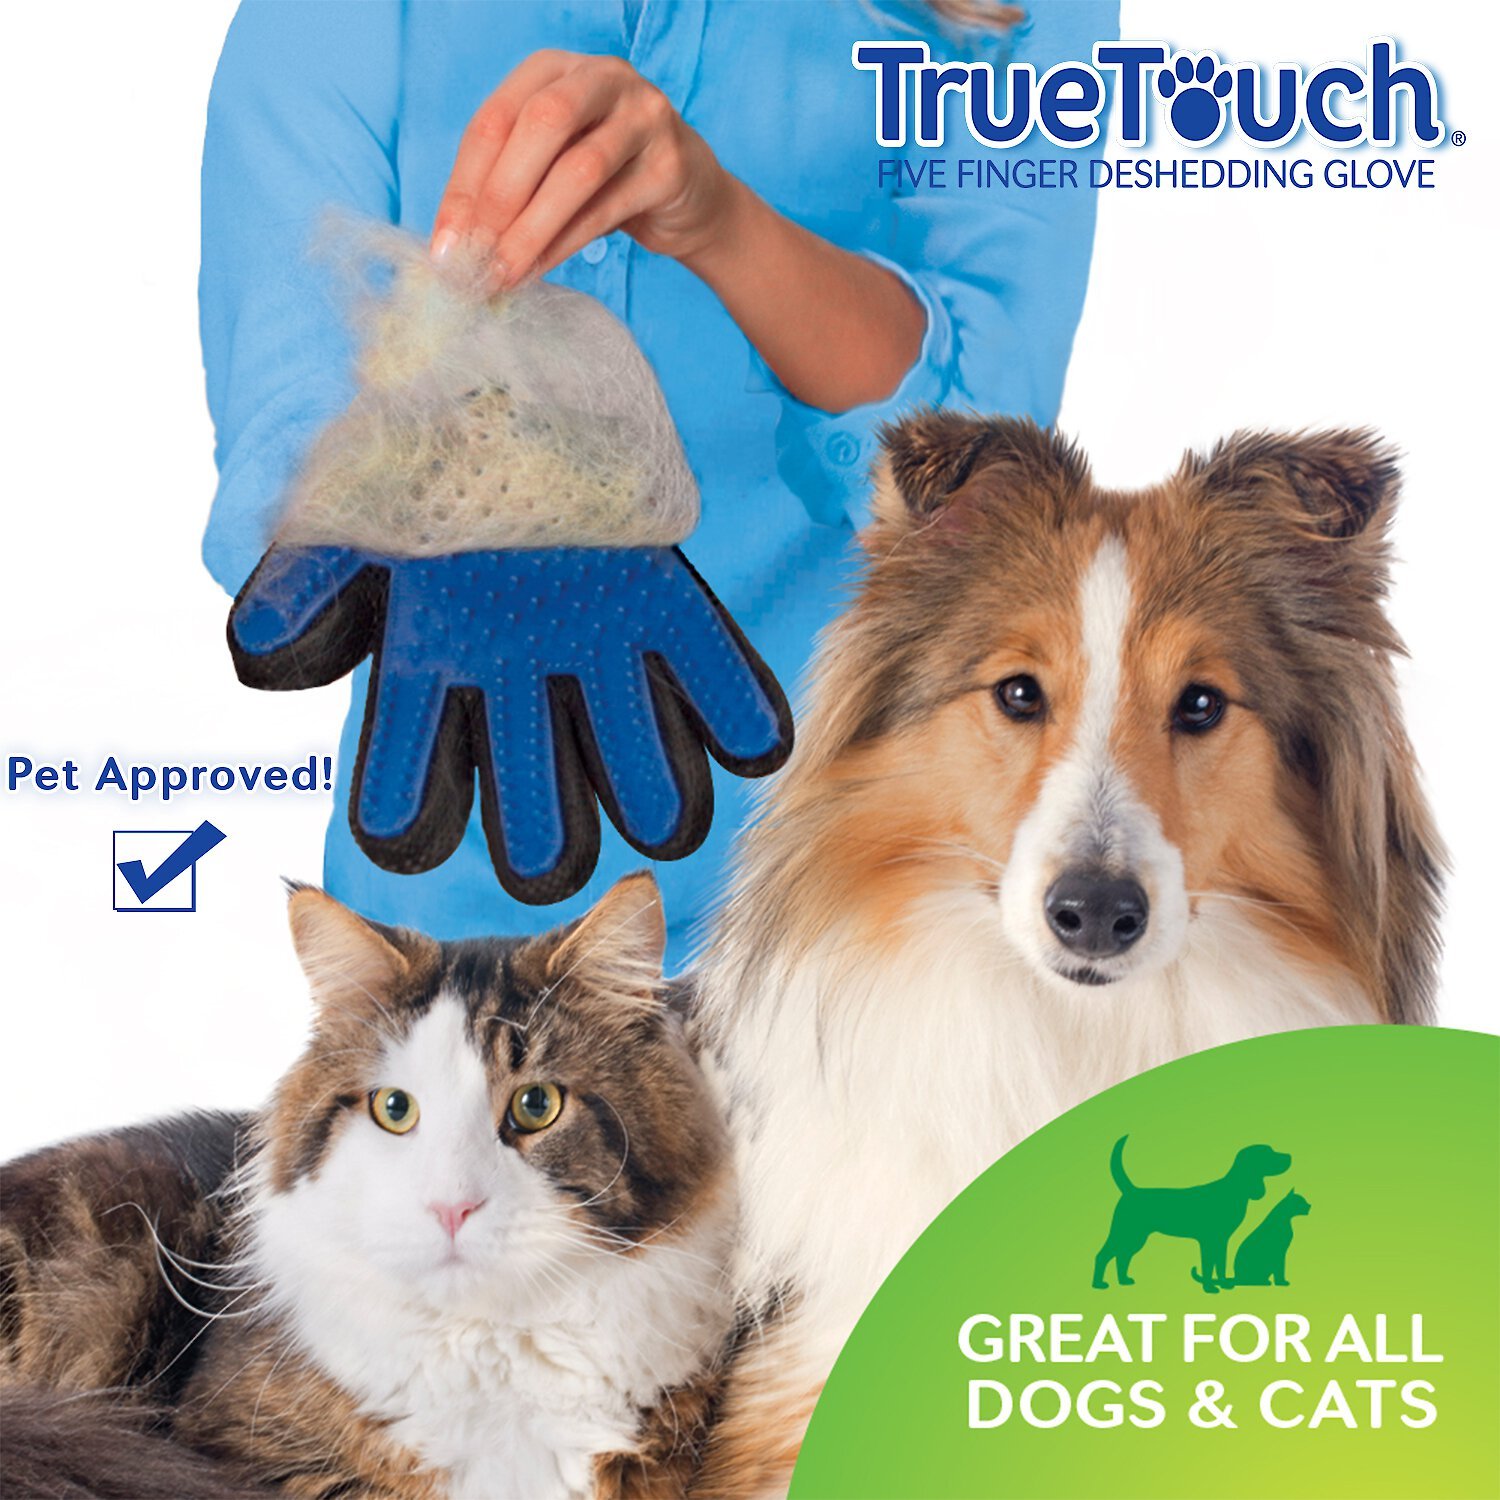 true touch pet glove reviews